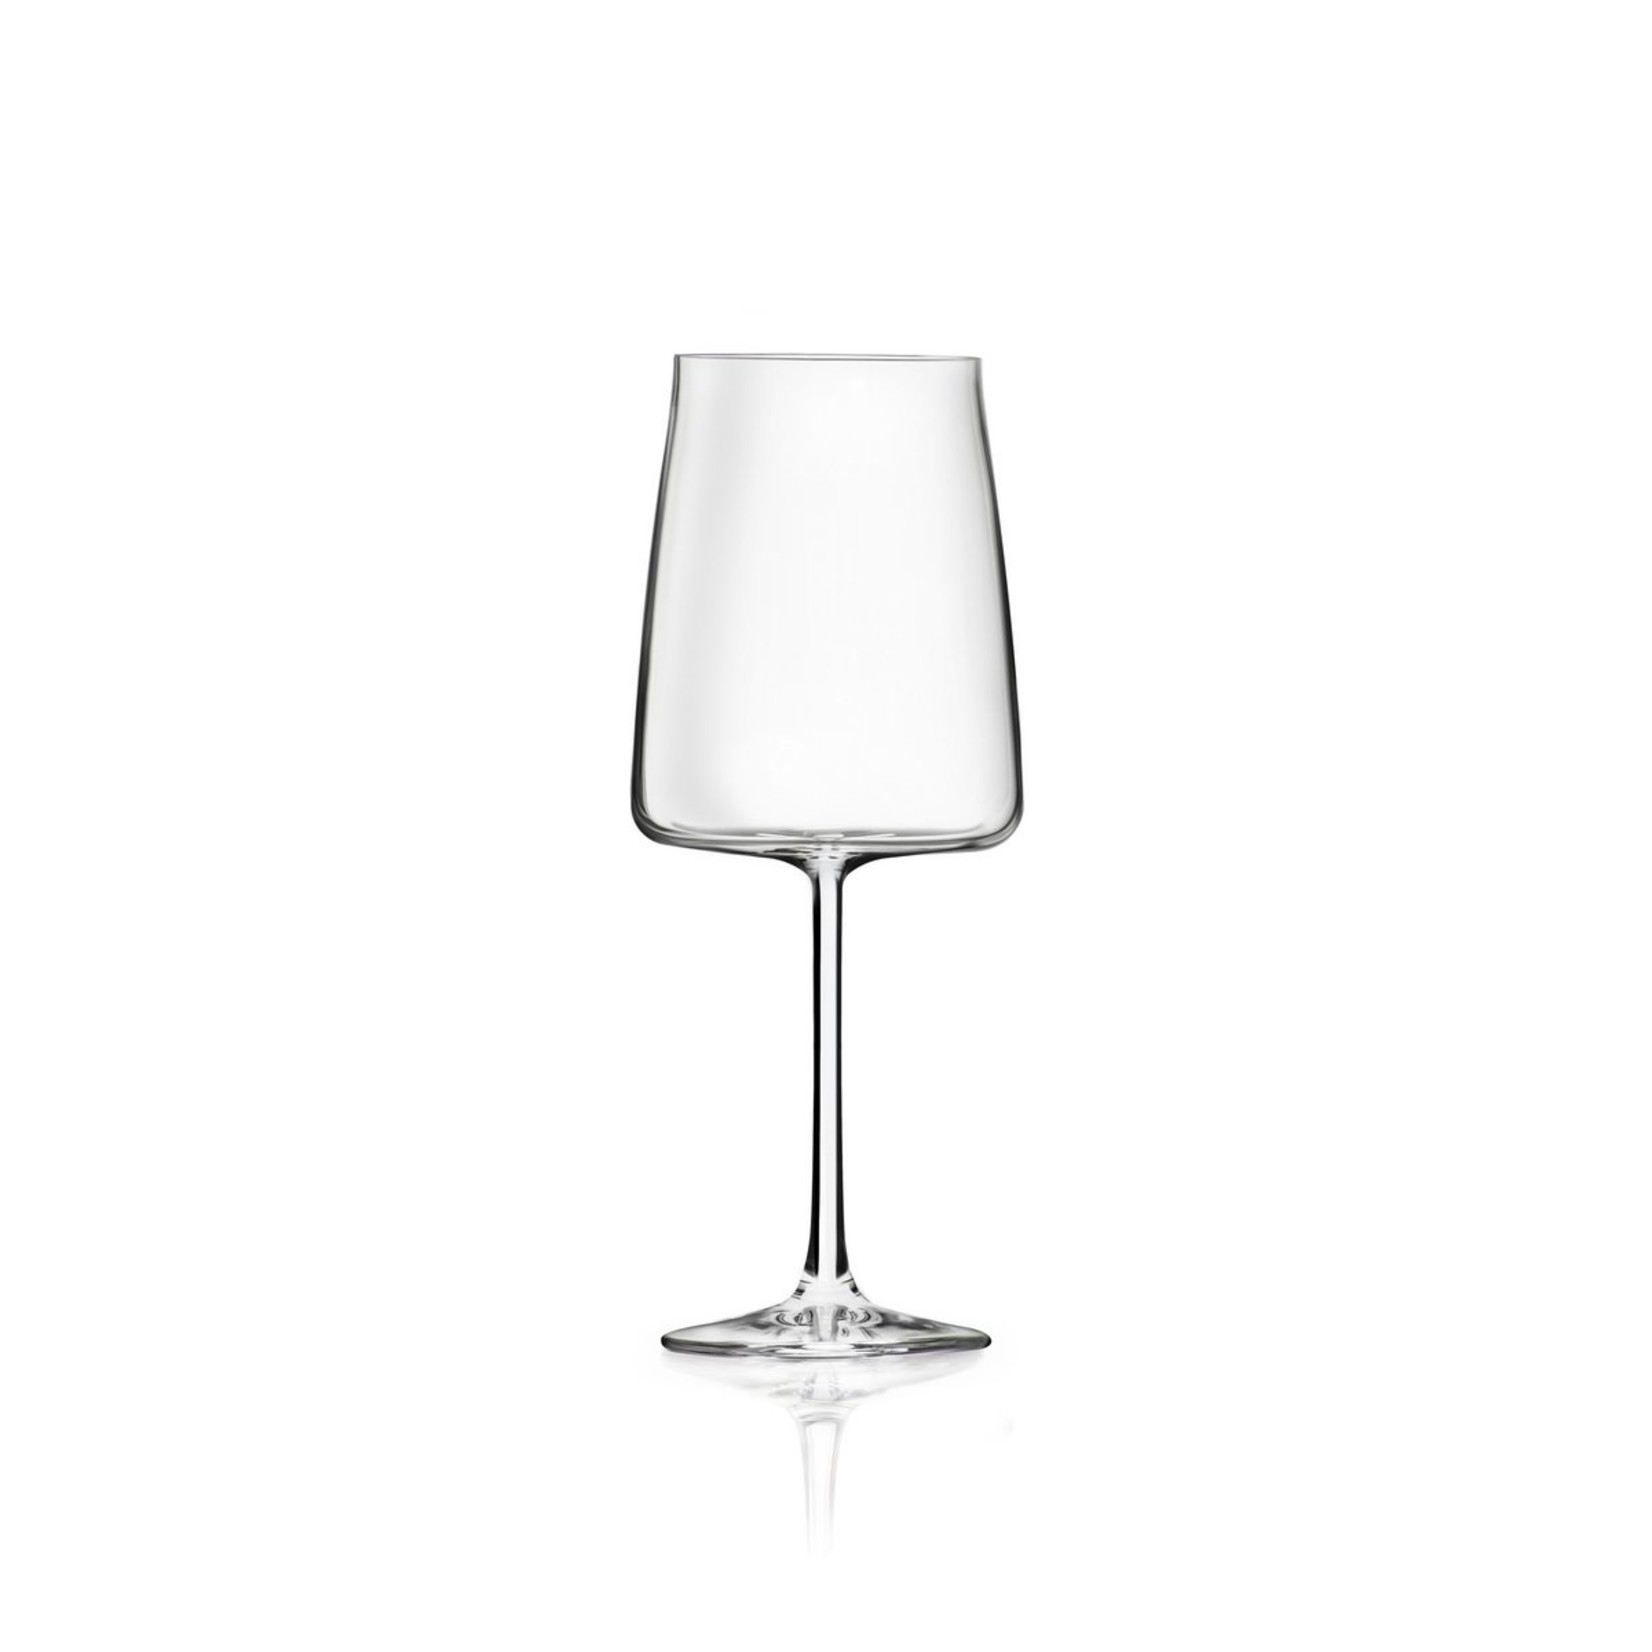 RCR Cristalleria Italiana White Whine Glass 54cl - Set of 6